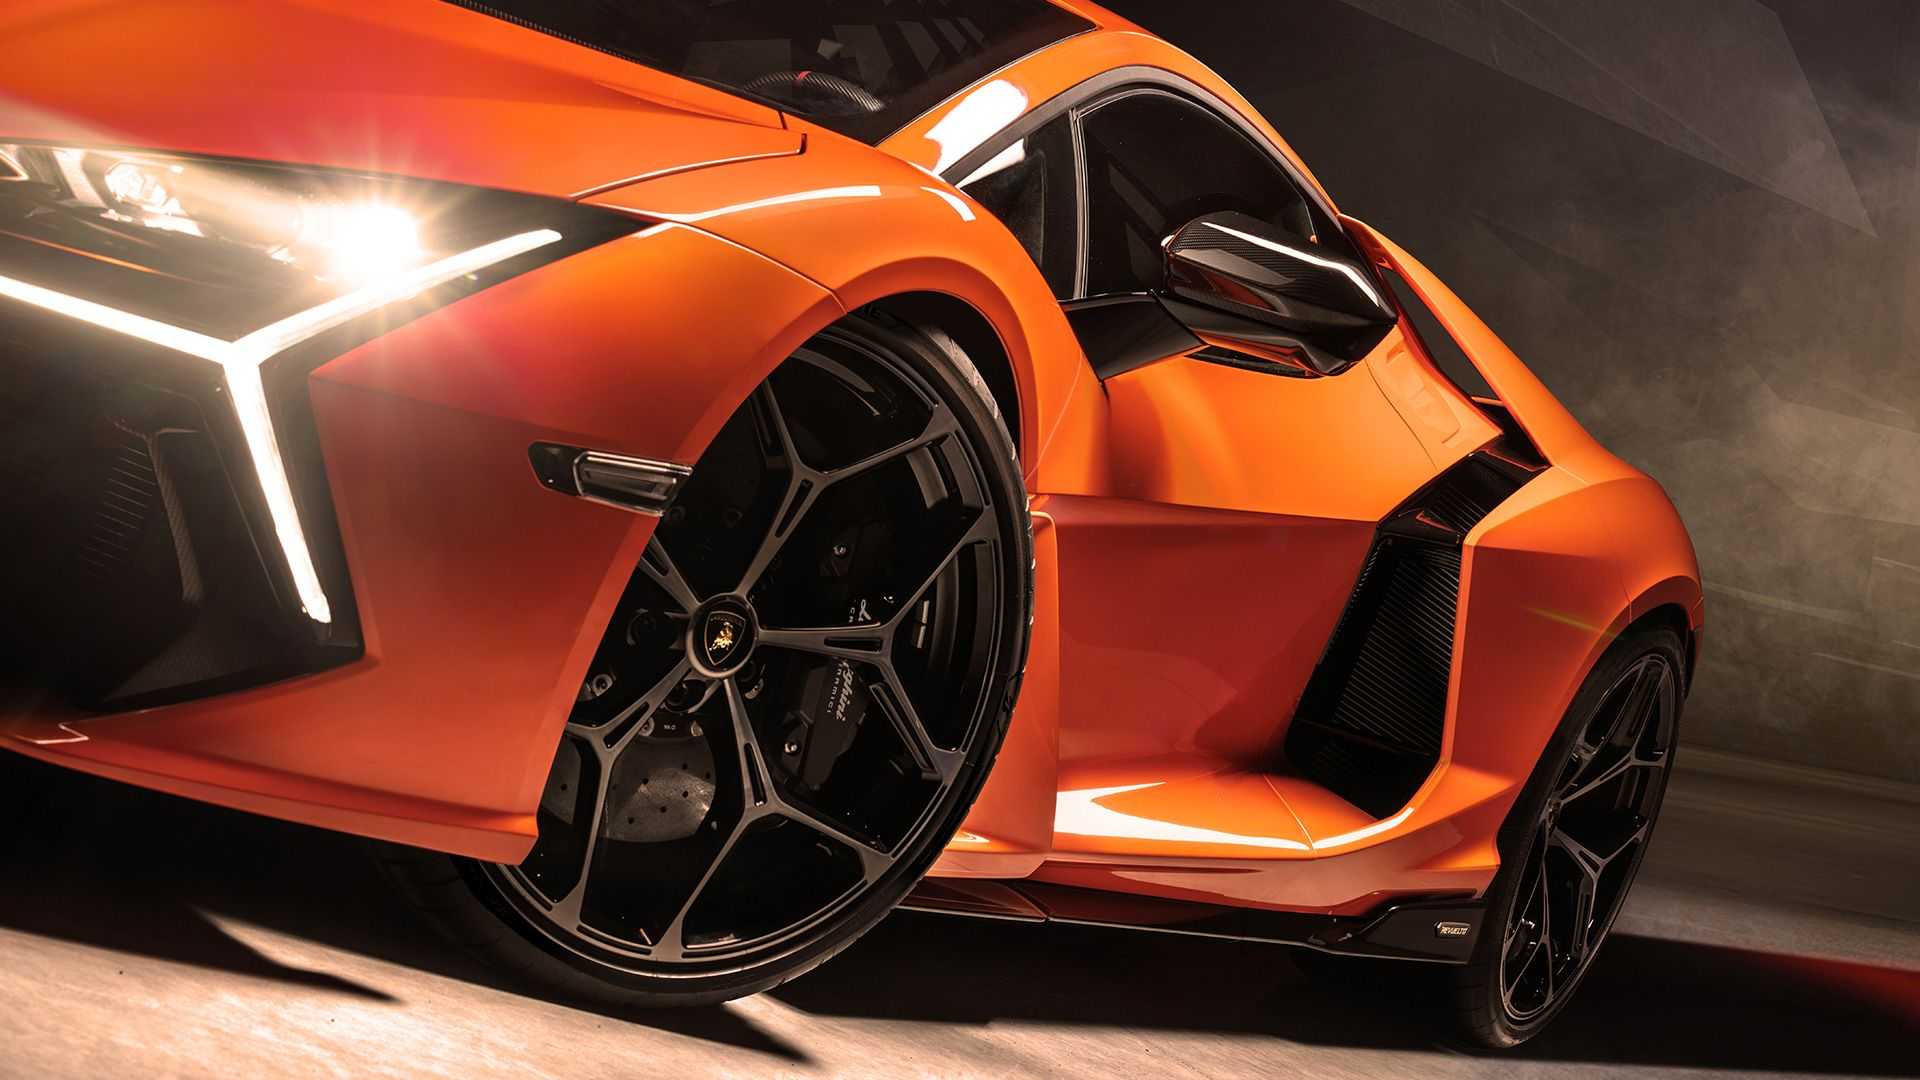 Lamborghini’s first electric car will be 2+2 GT